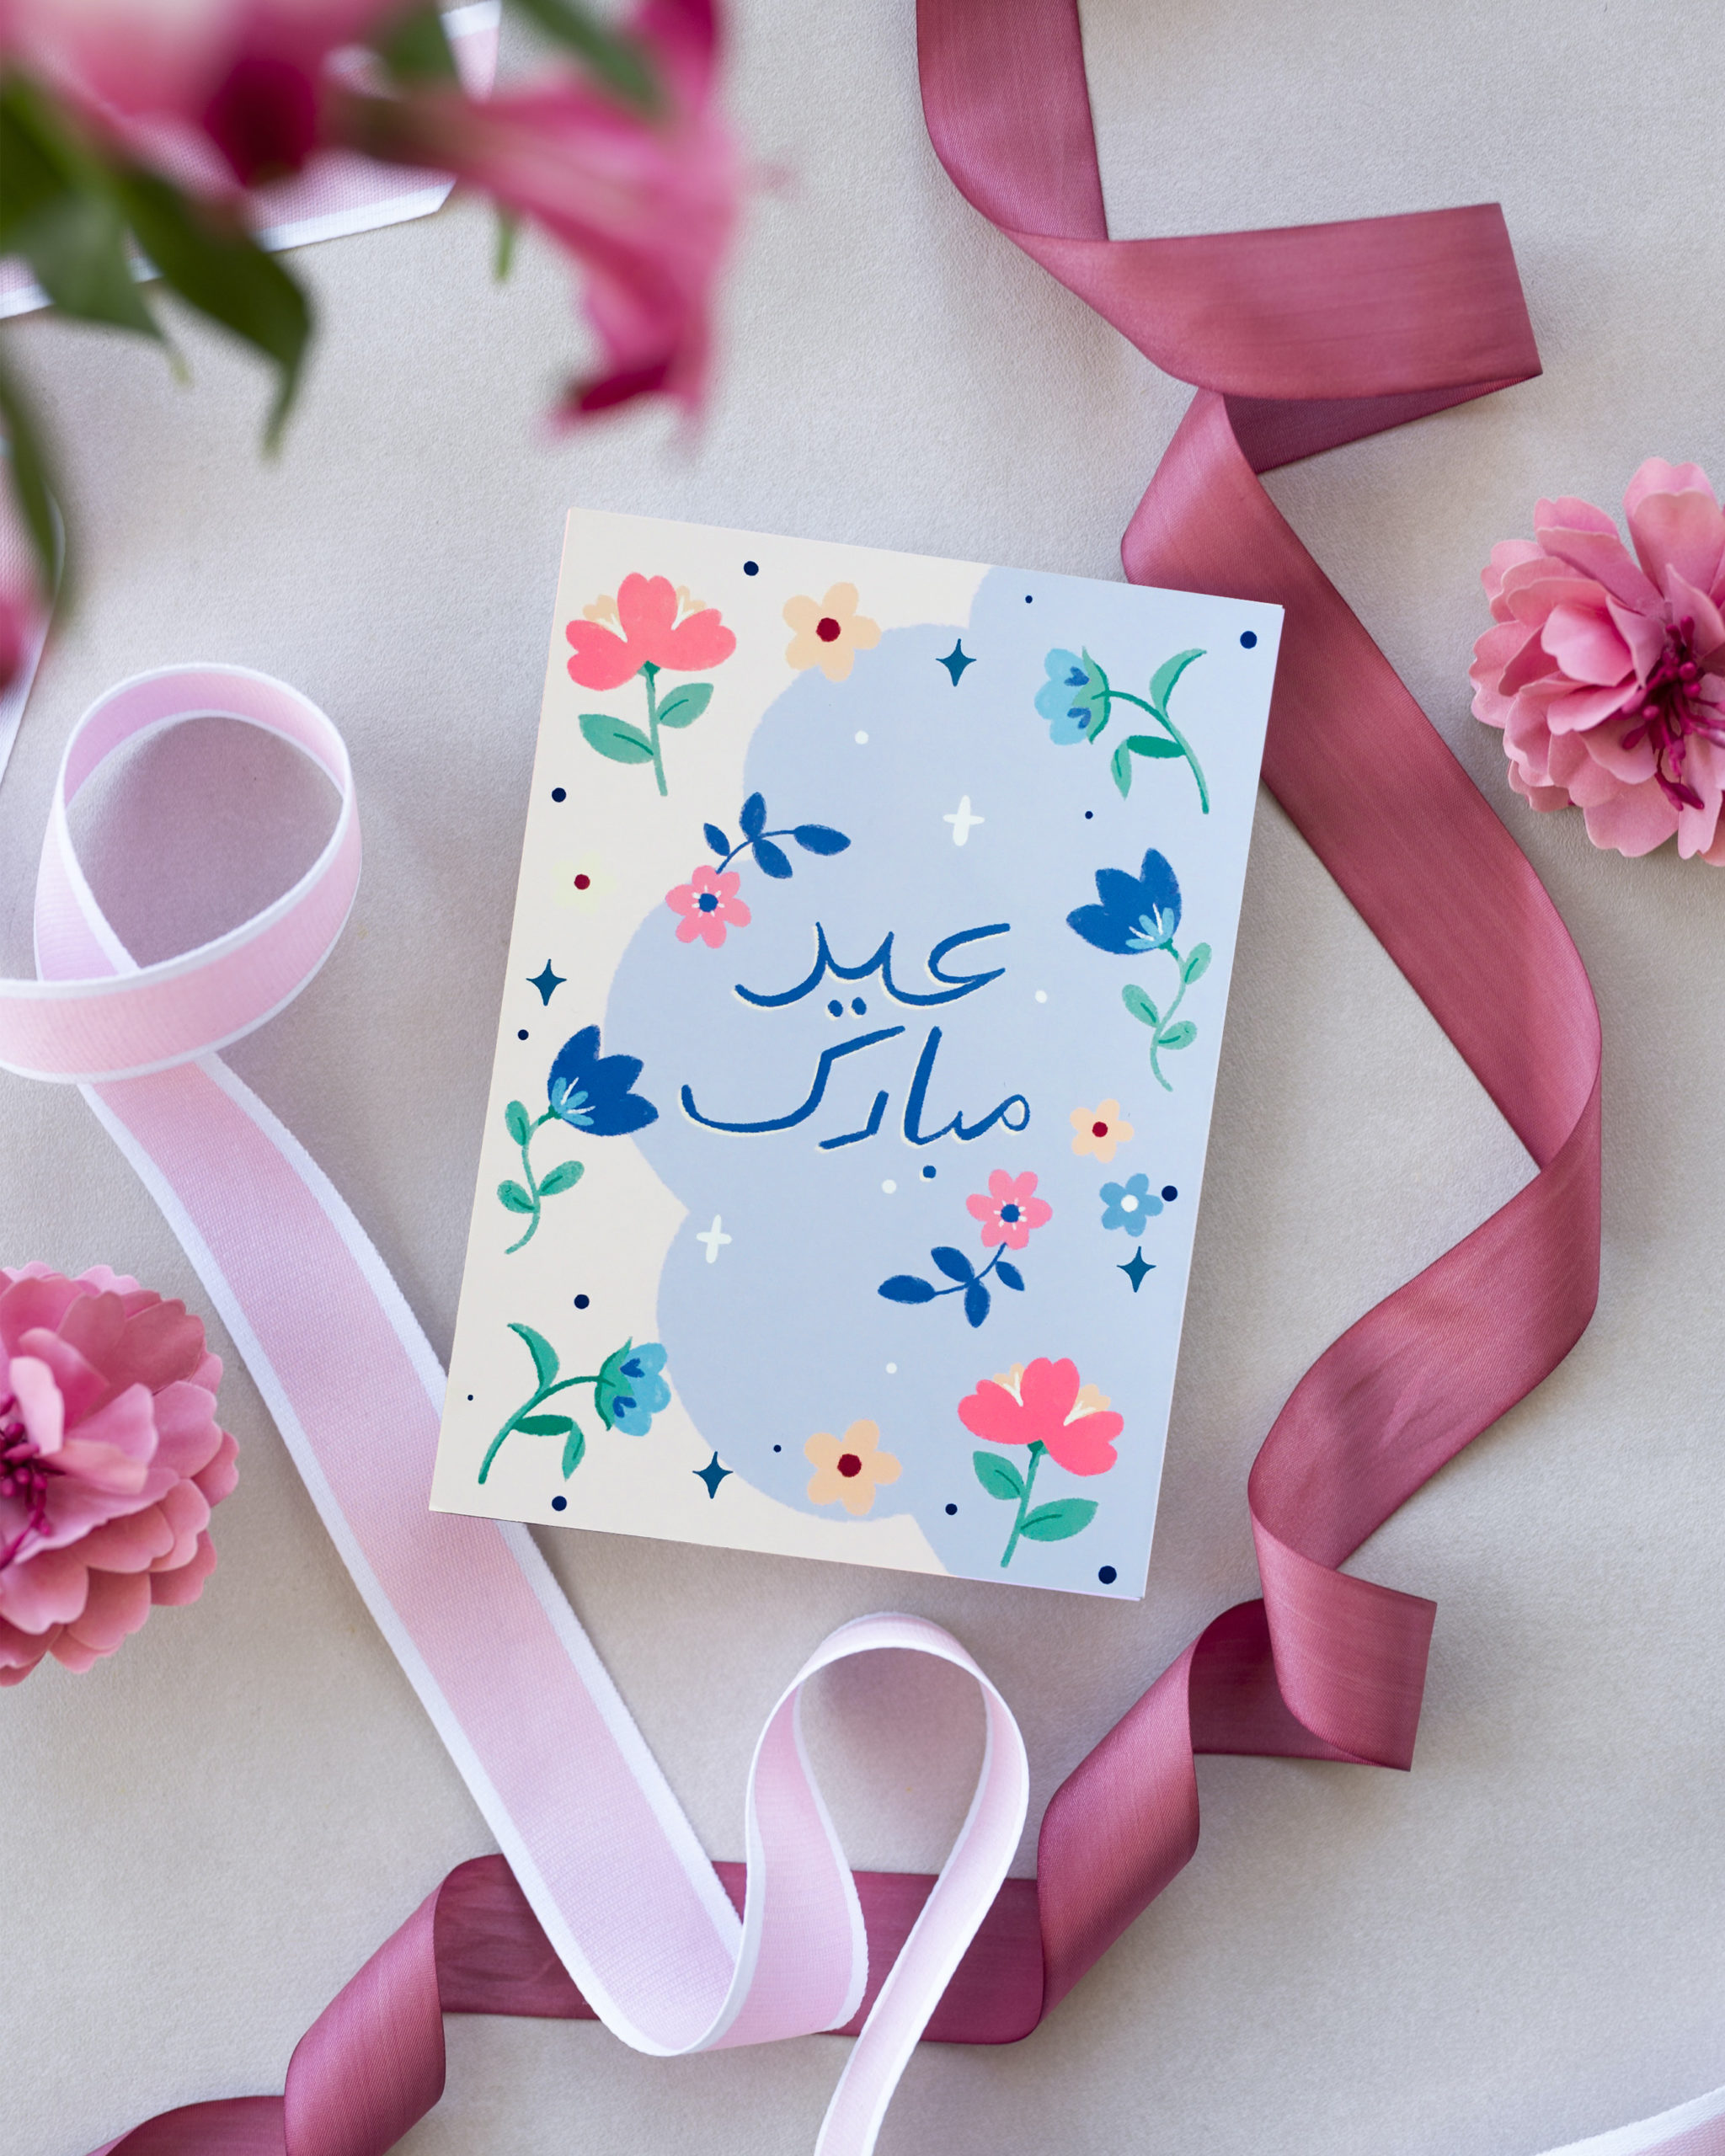 eid mubarak love cards in urdu